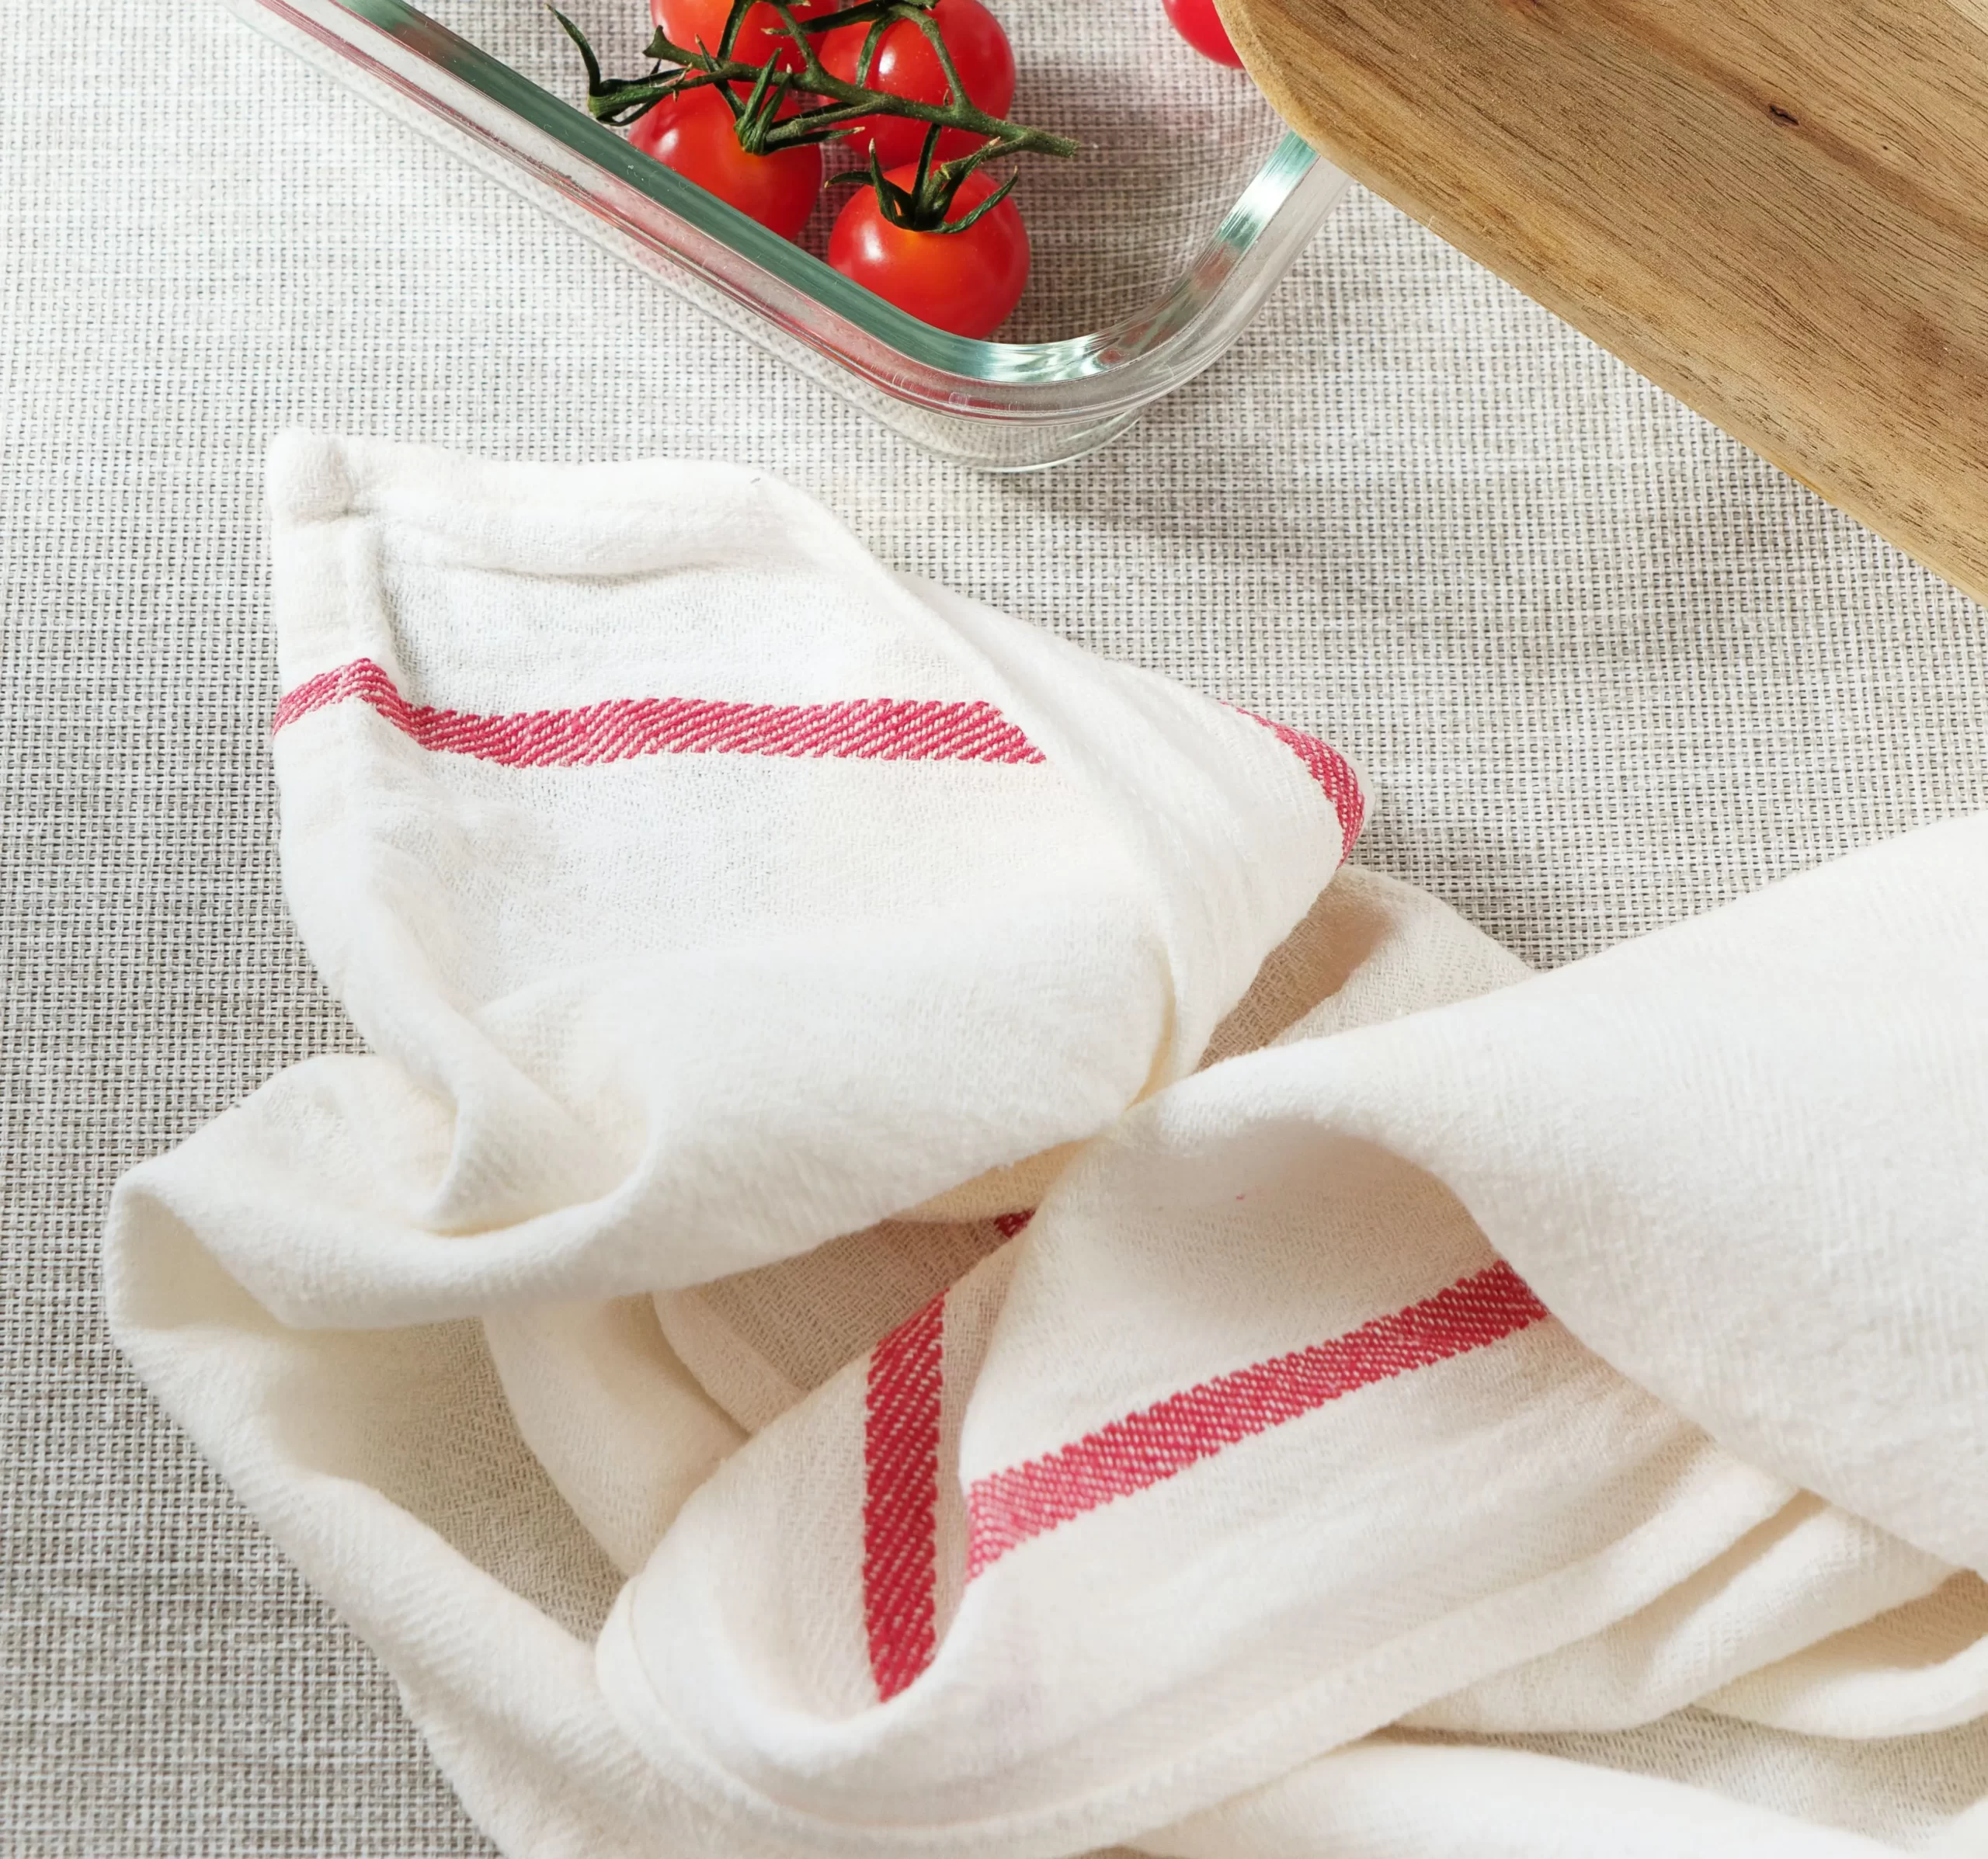 Kitchen towel linen manufacturers